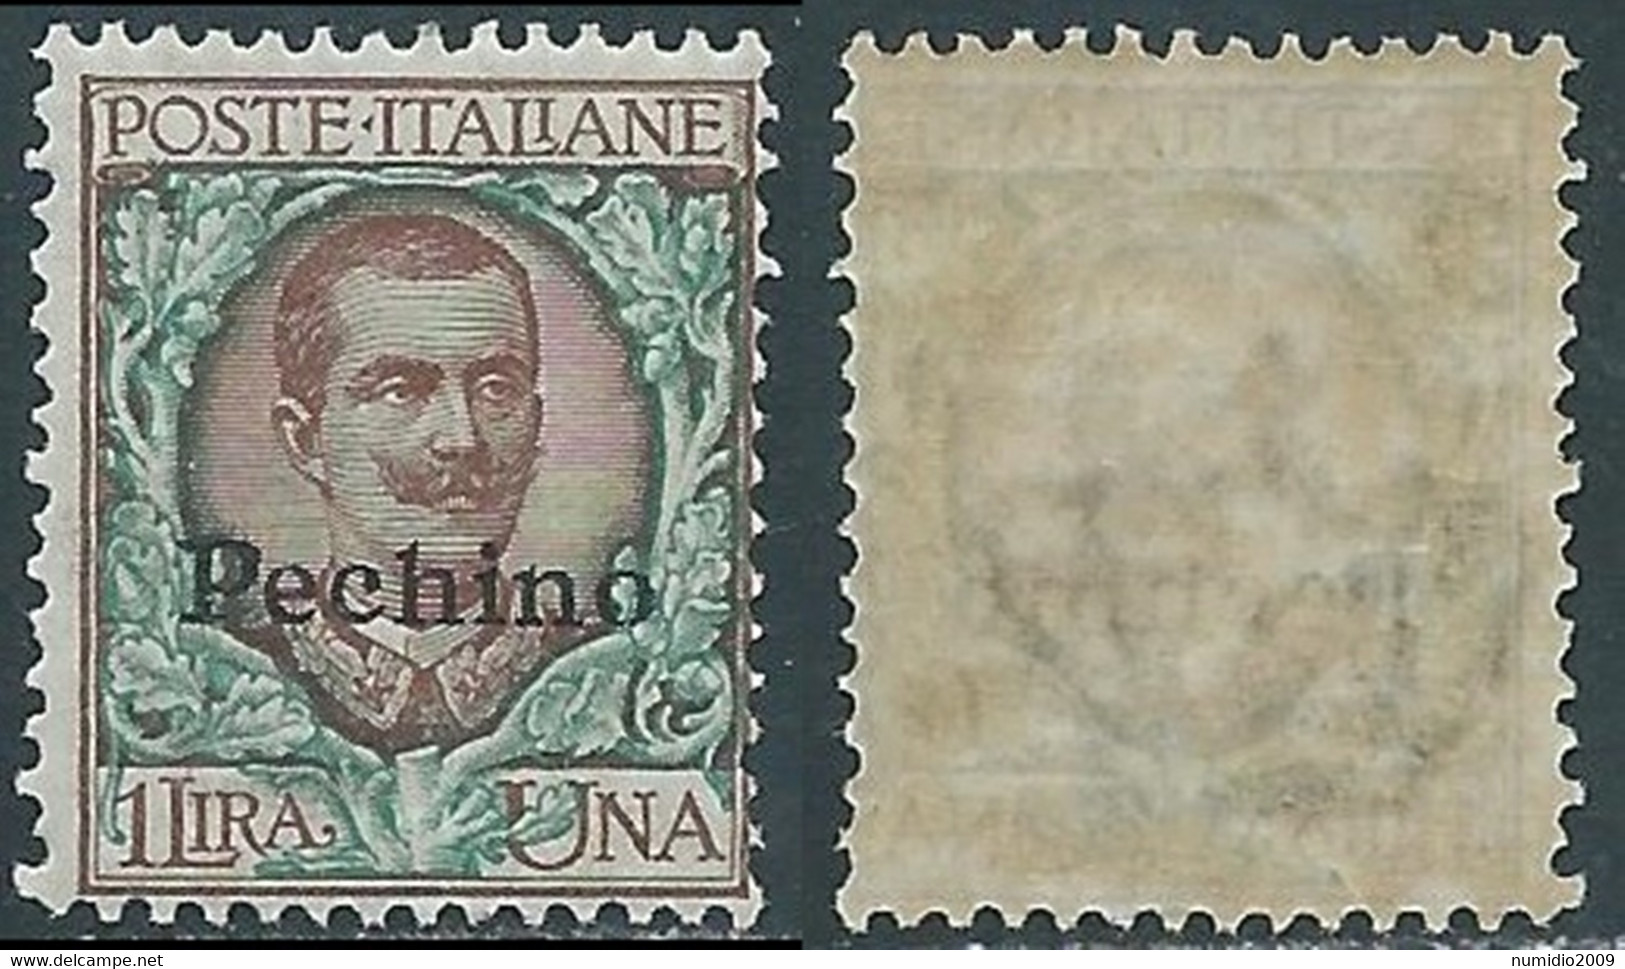 1917-18 CINA PECHINO FLOREALE 1 LIRA MNH ** - RF38-8 - Pekin